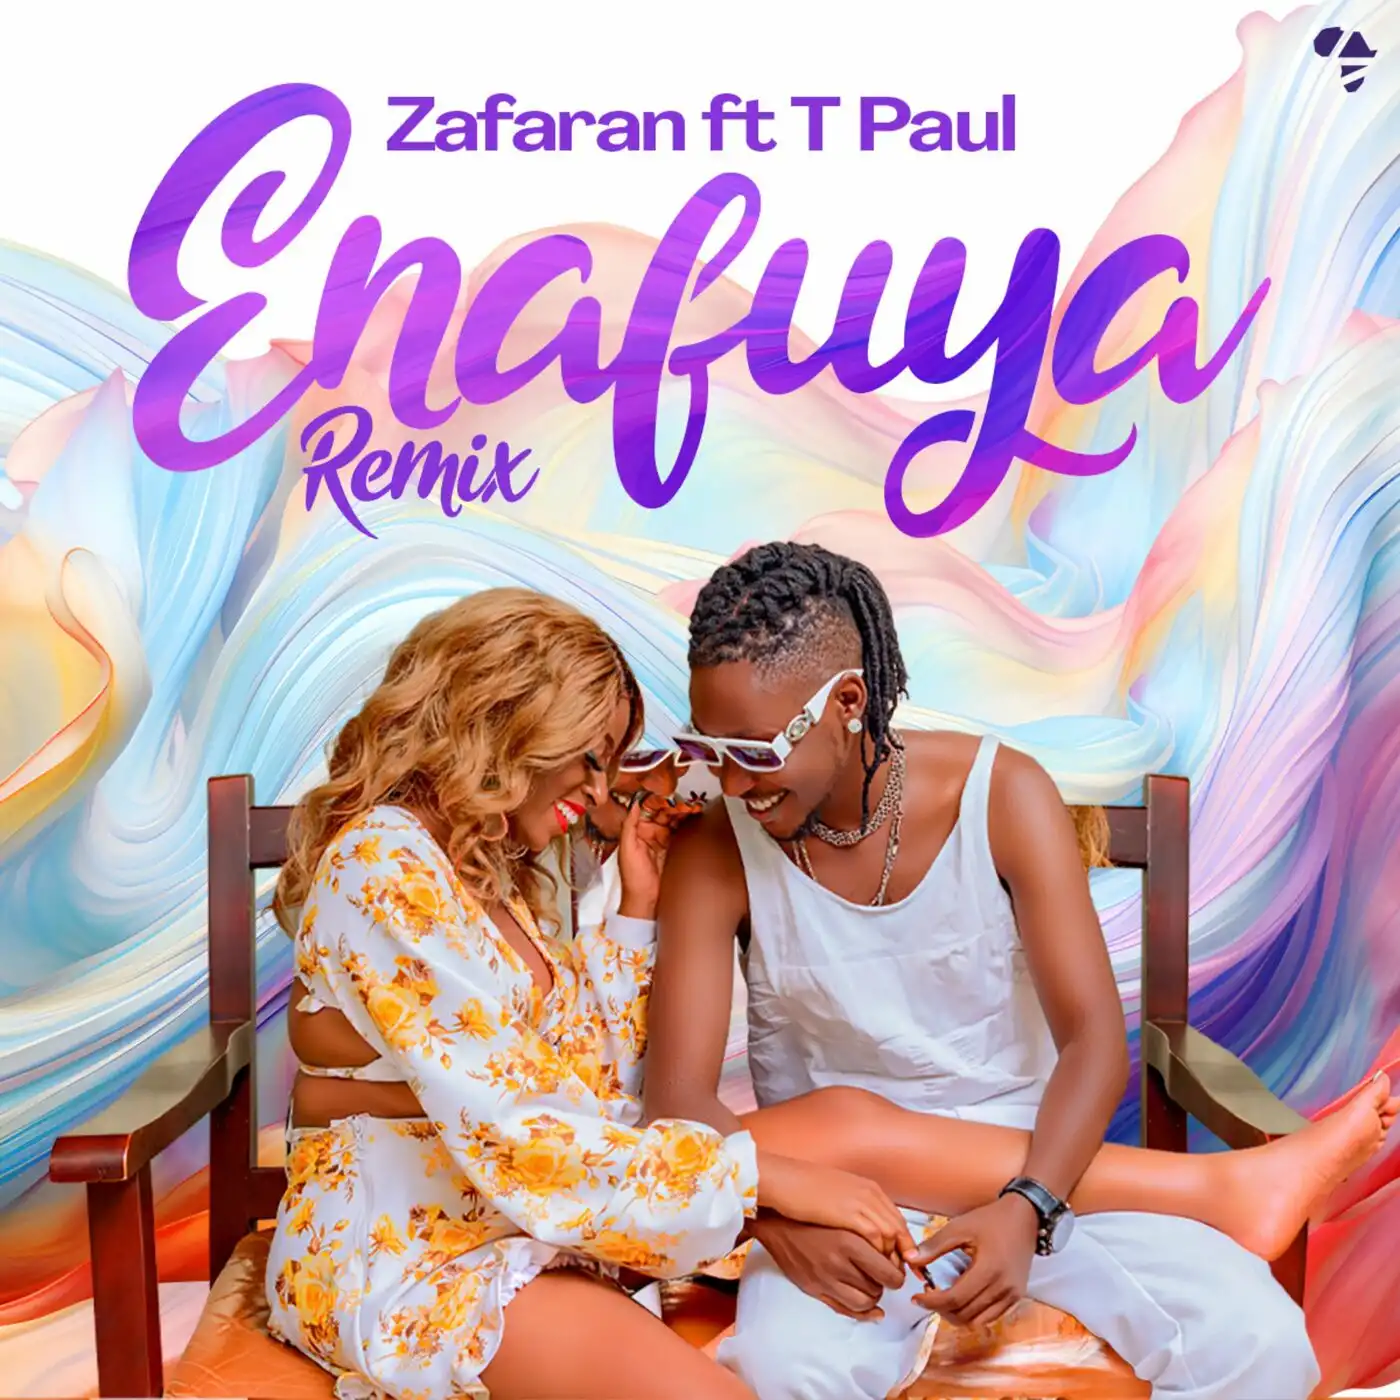 zafaran-enafuya-remix-album-cover